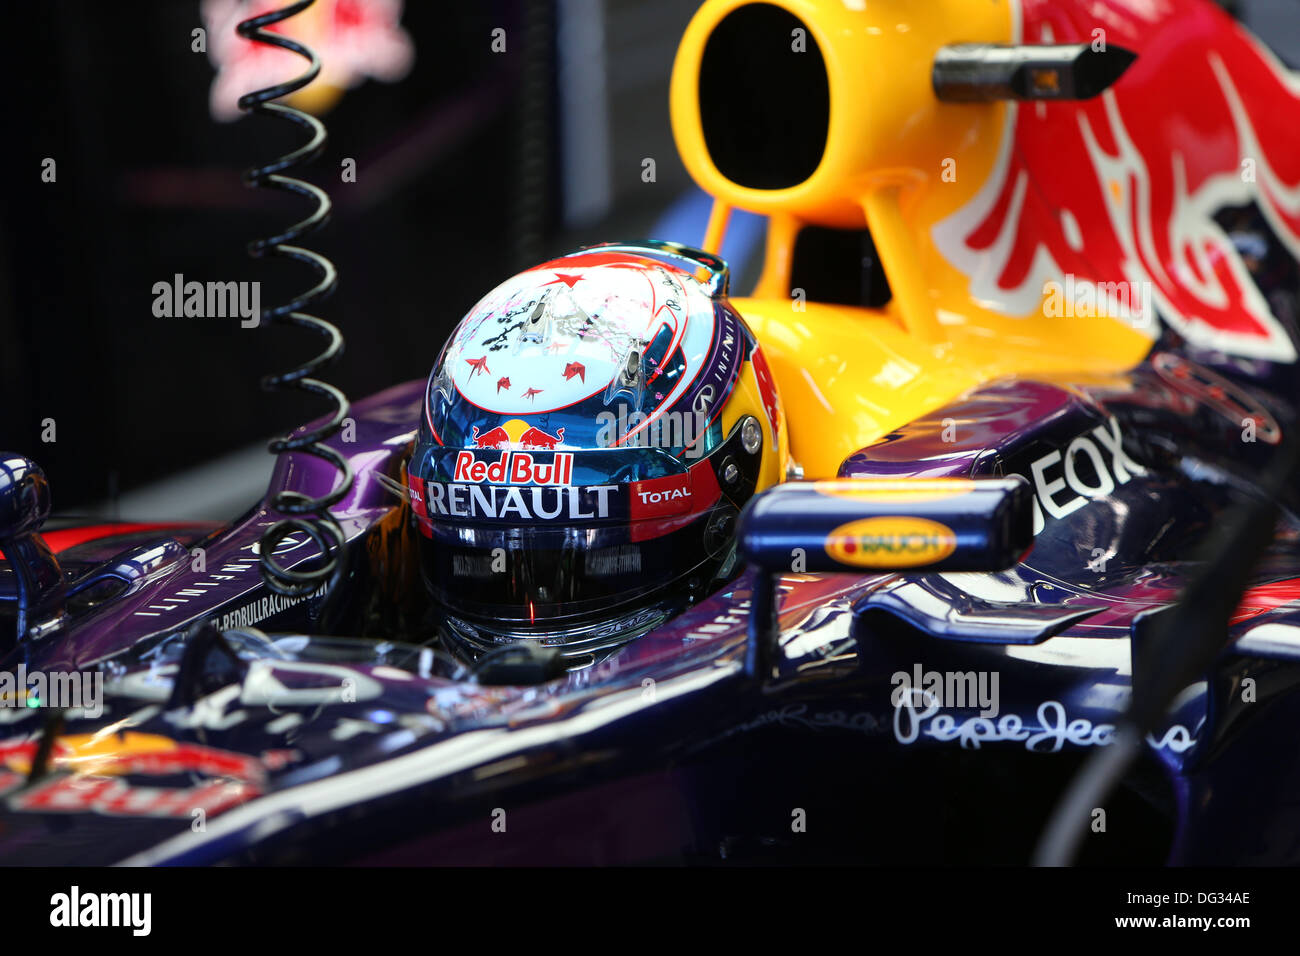 Suzuka, Japan. 13. Oktober 2013. Motorsport: FIA Formula One World Championship 2013, Grand Prix von Japan, #1 Sebastian Vettel (GER, Infiniti Red Bull Racing), Credit: Dpa picture-Alliance/Alamy Live News Stockfoto